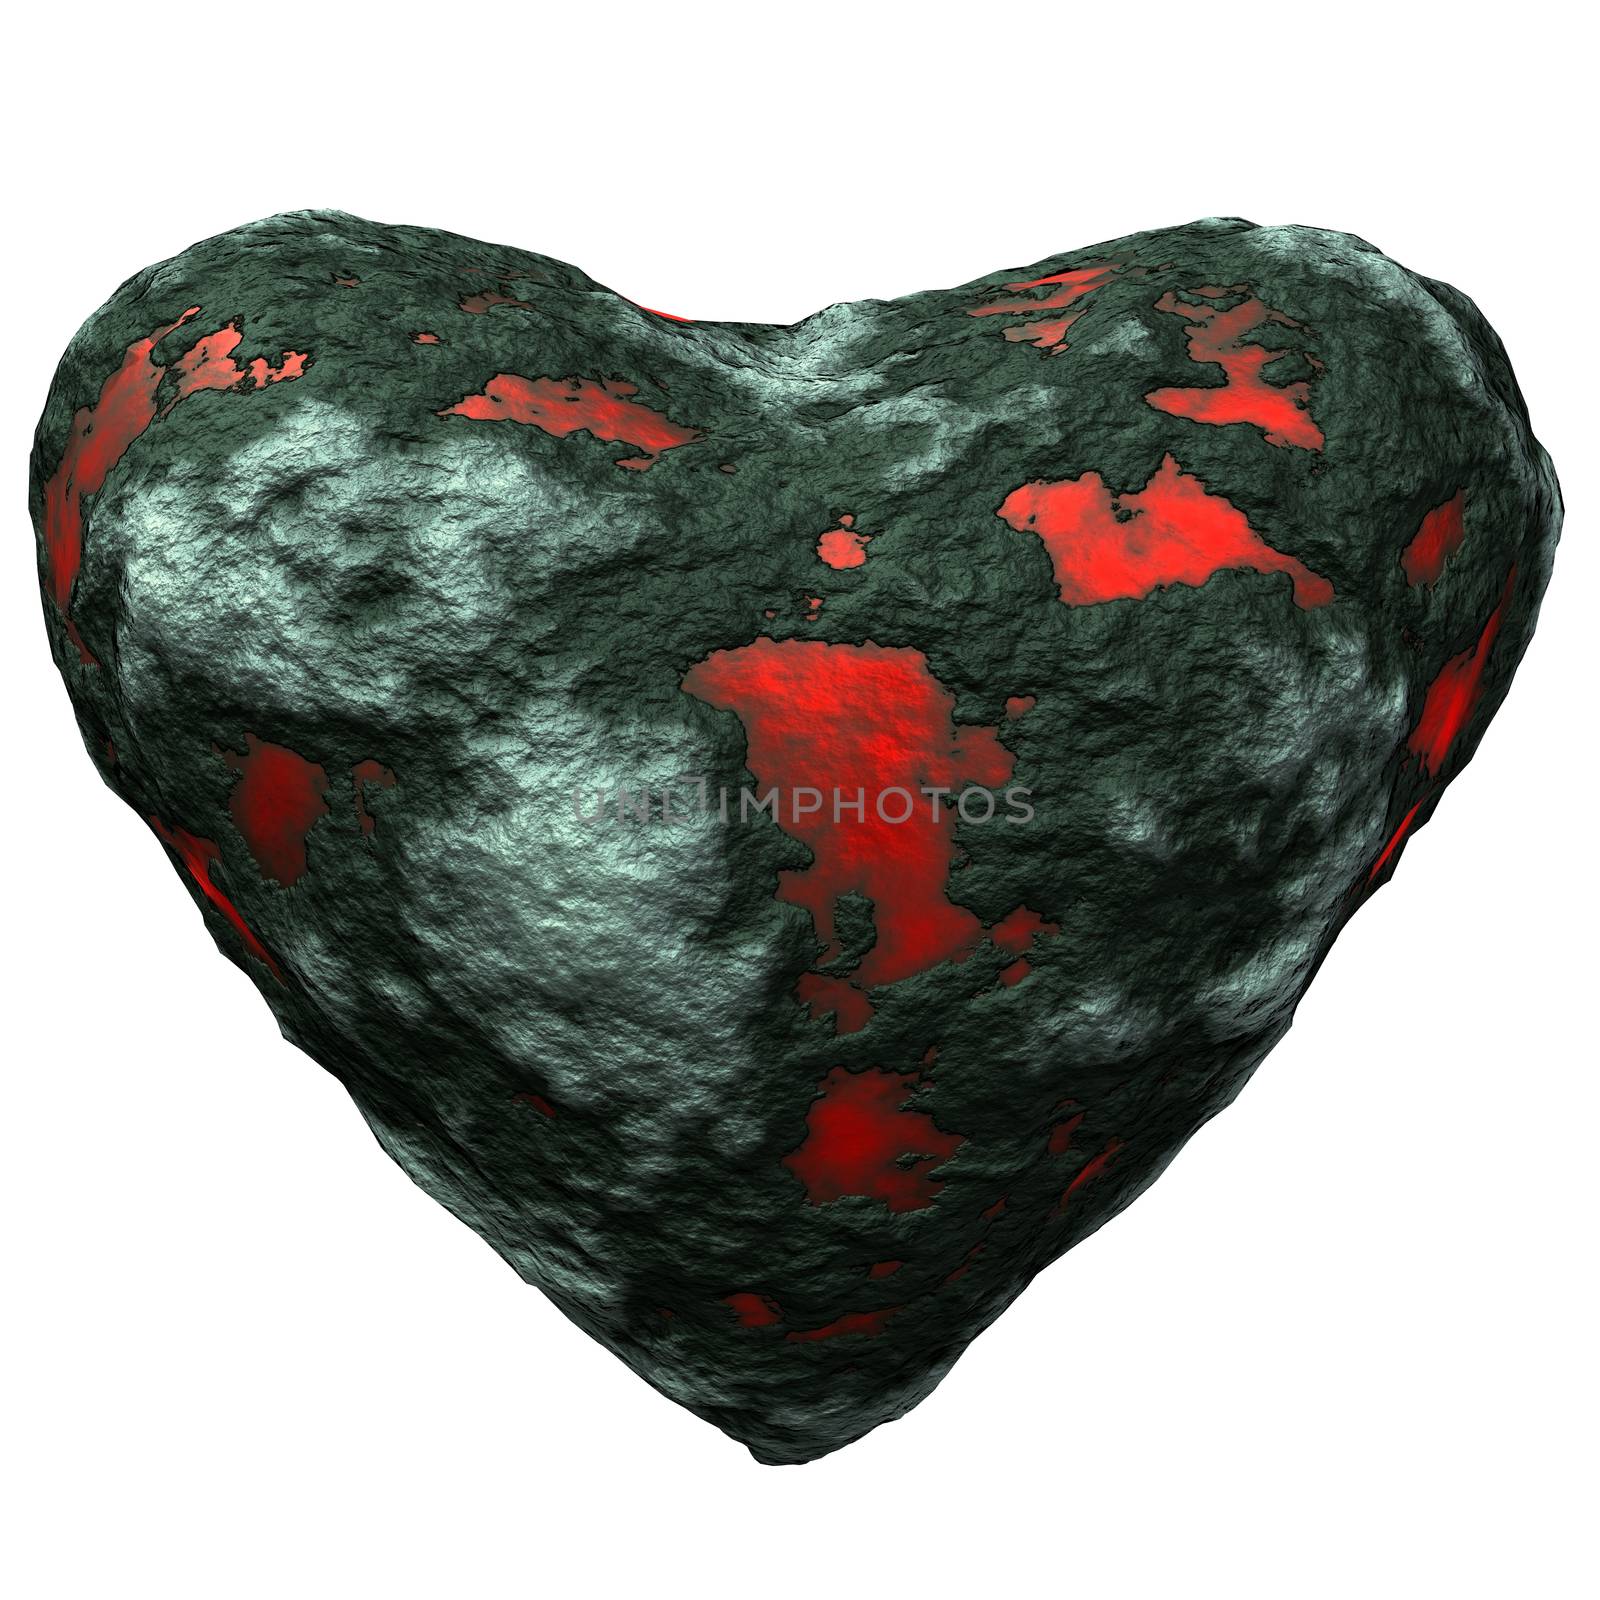 Petrous Heart illustration by dengess